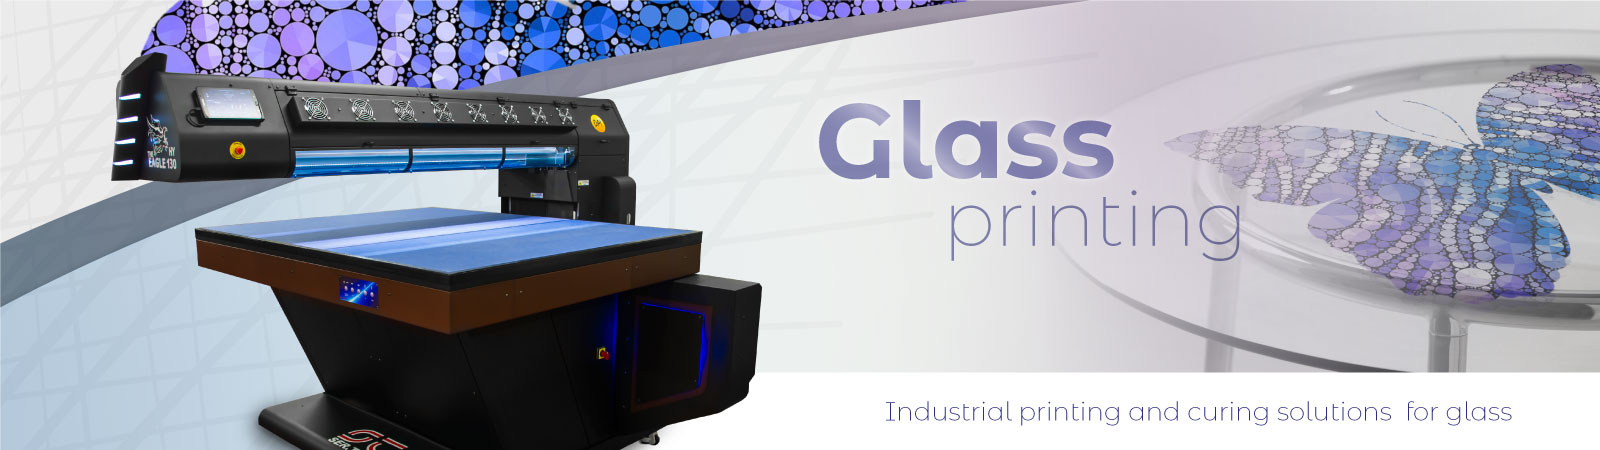 industrial printers glass